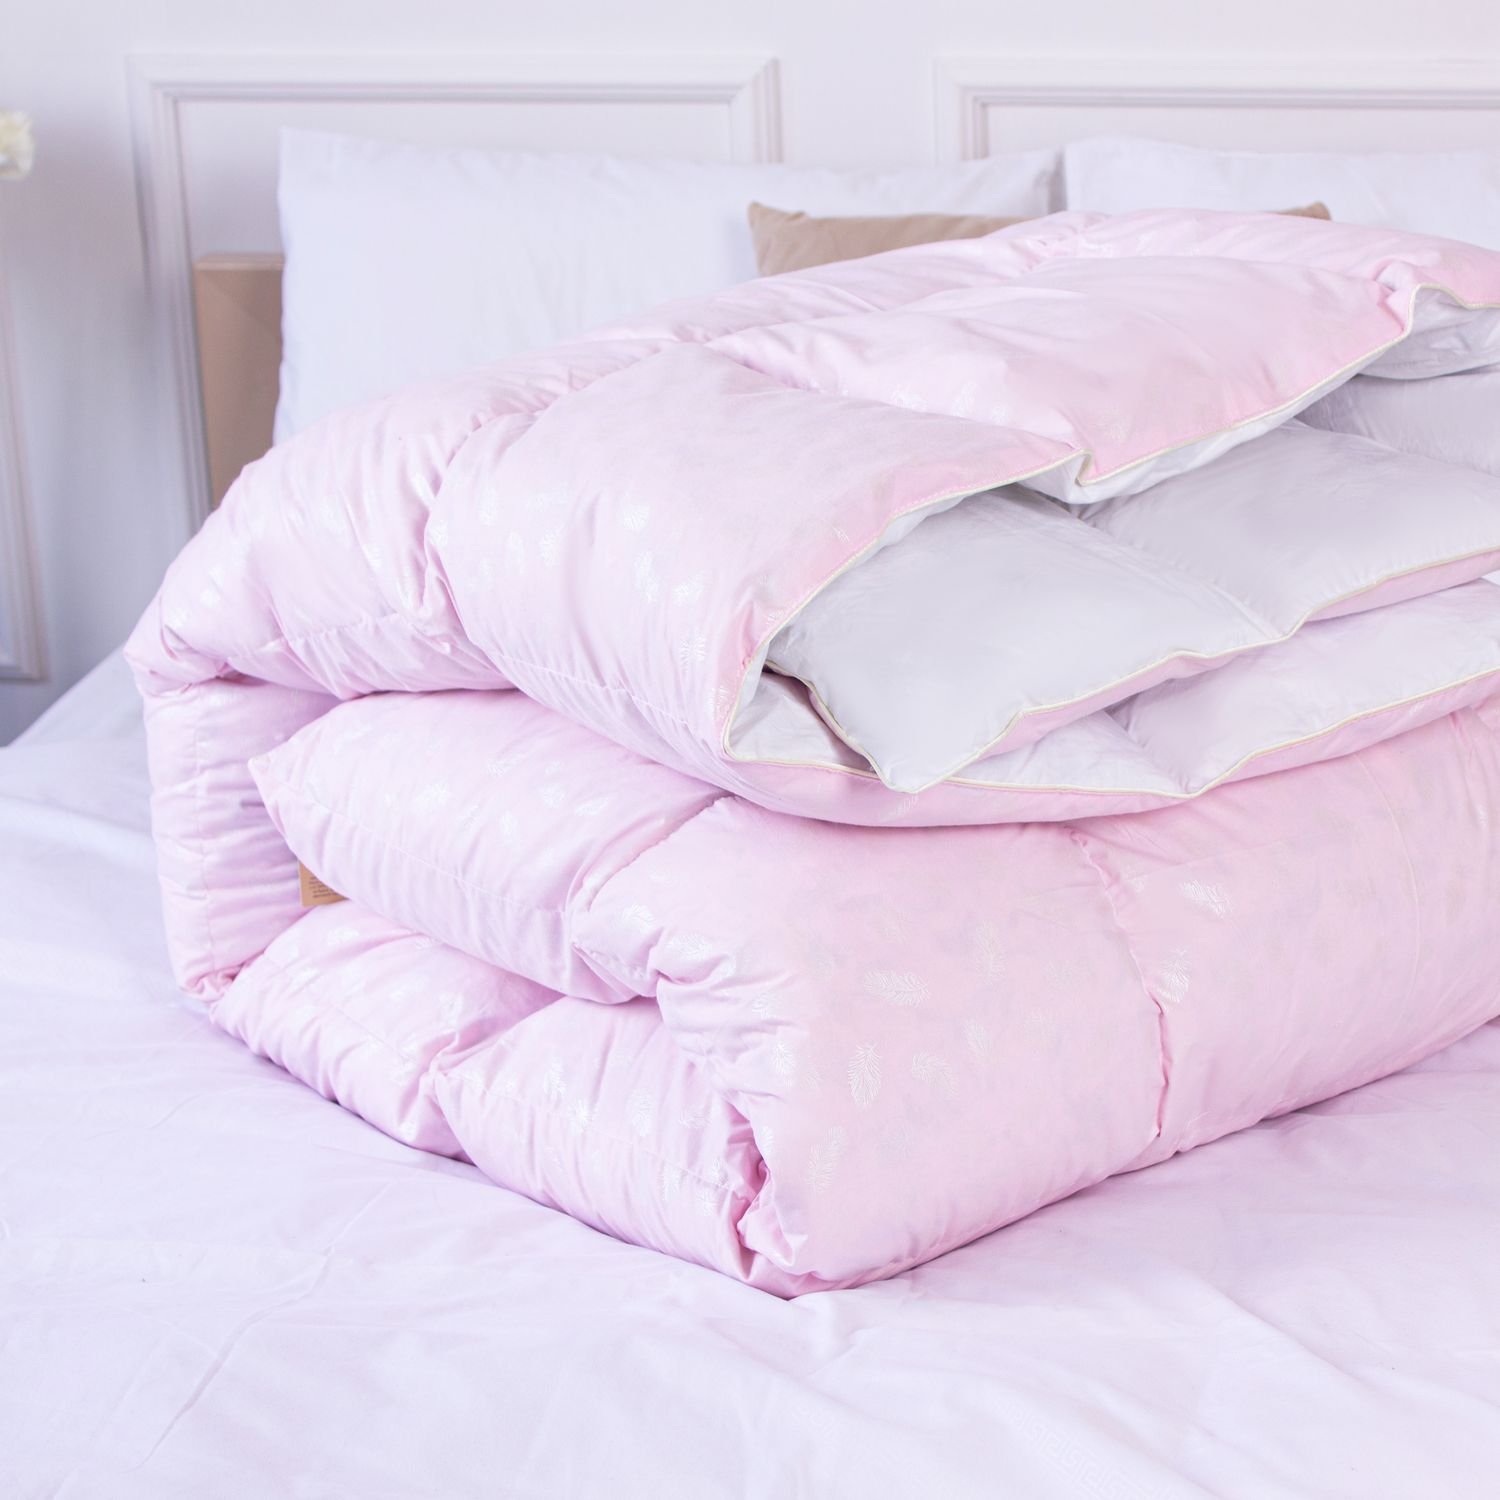 Одеяло пуховое MirSon Karmen №1853 Bio-Pink, 50% пух, полуторное, 205x140, розовое (2200003014747) - фото 3